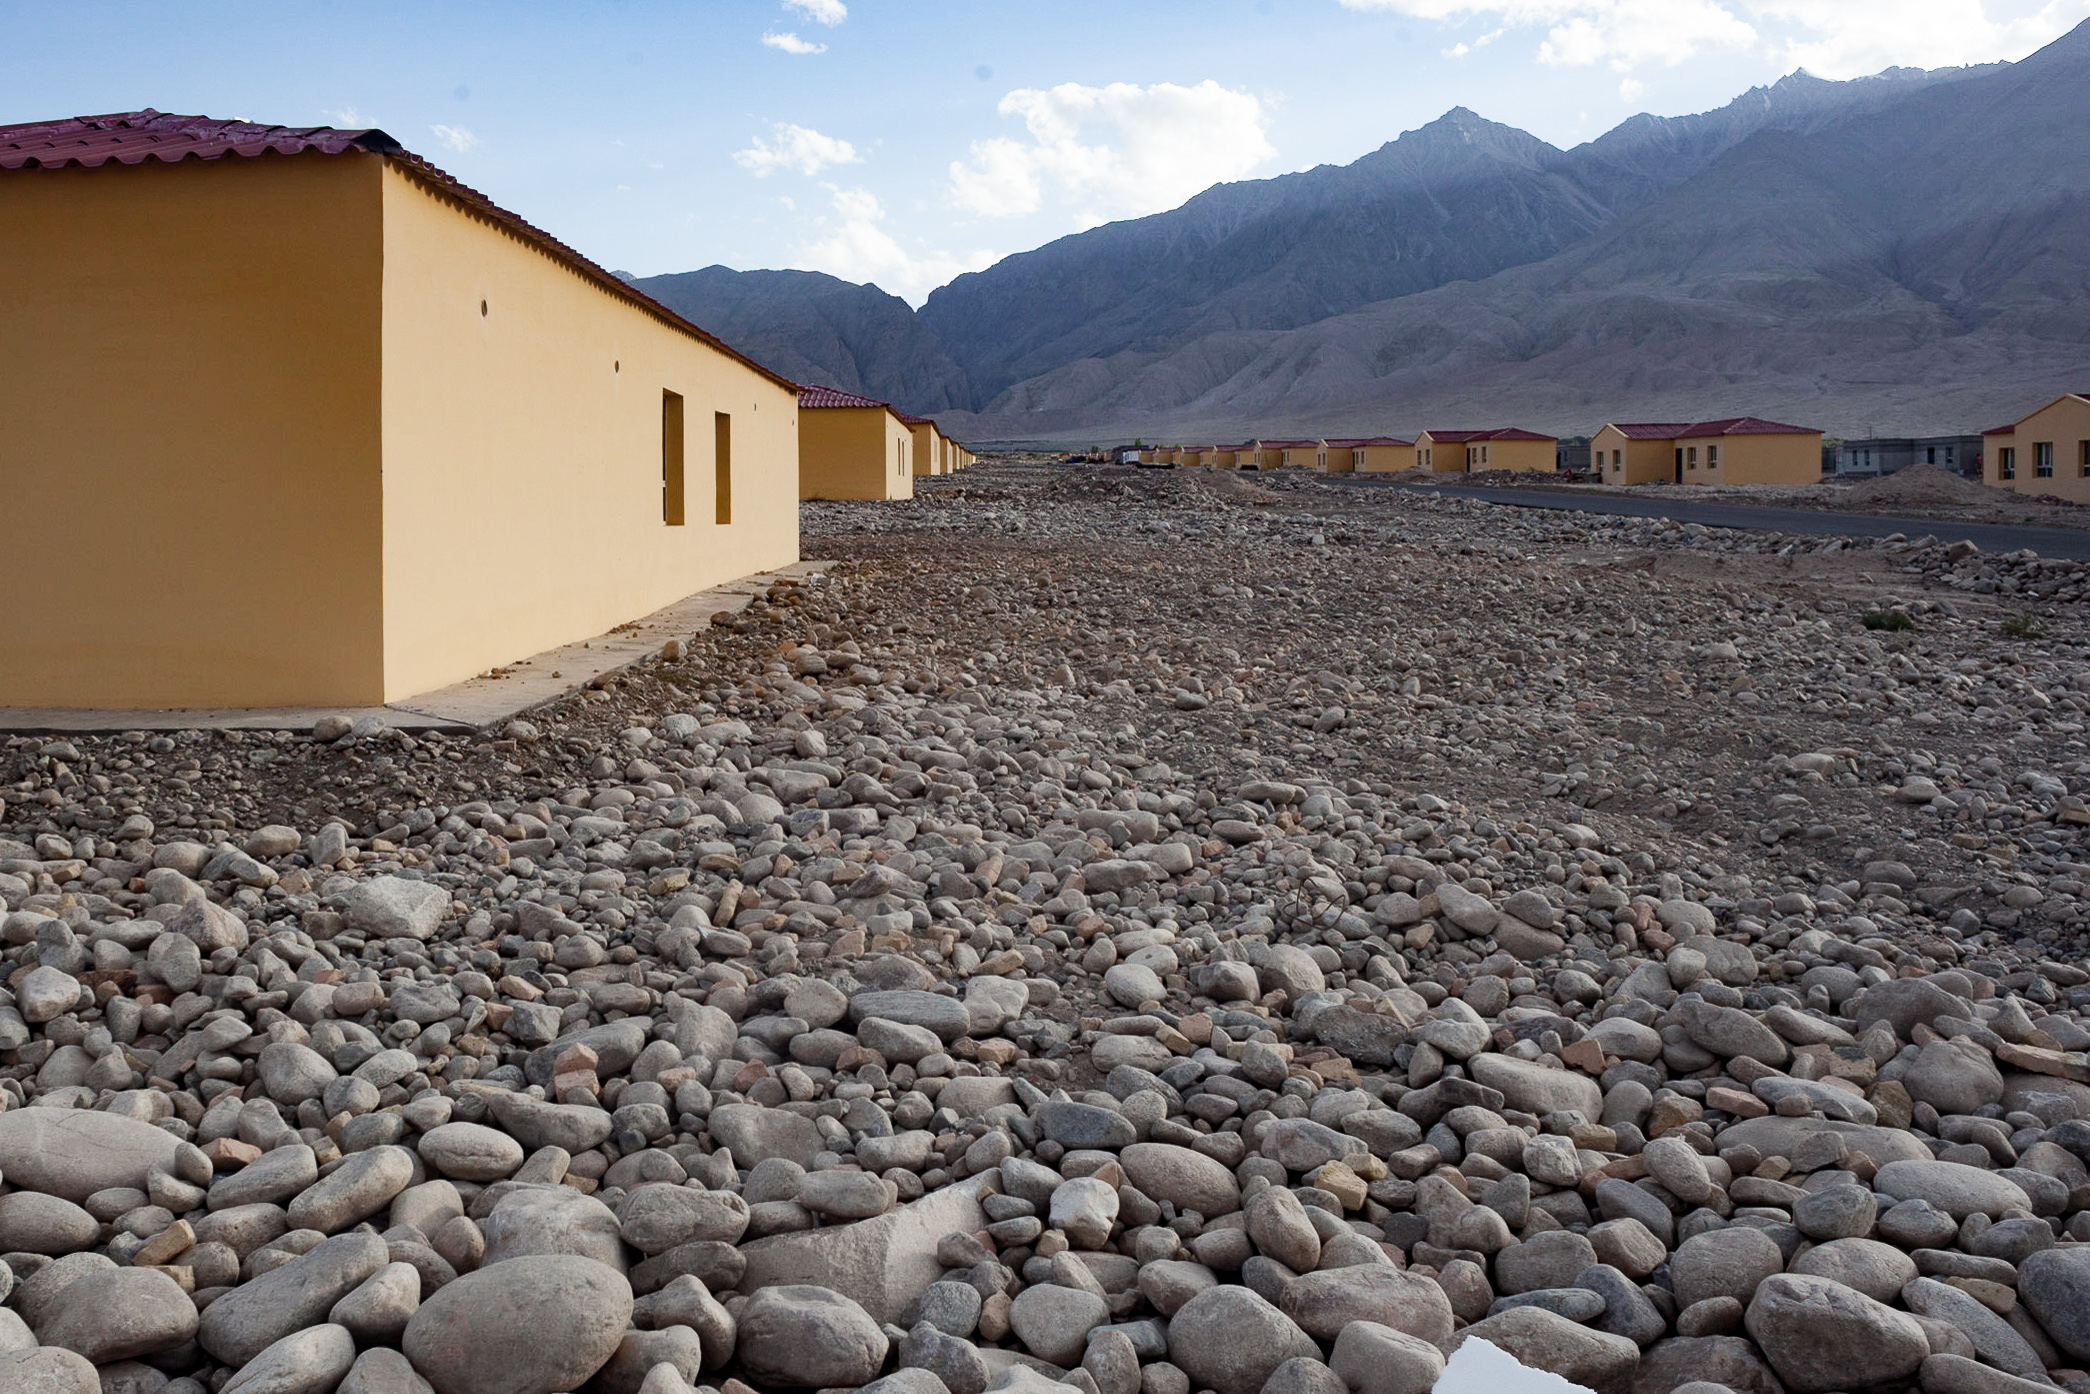 Socialist New Village in Tashkurgan, Xinjiang Province. Photo: Martin Saxer, 2014.